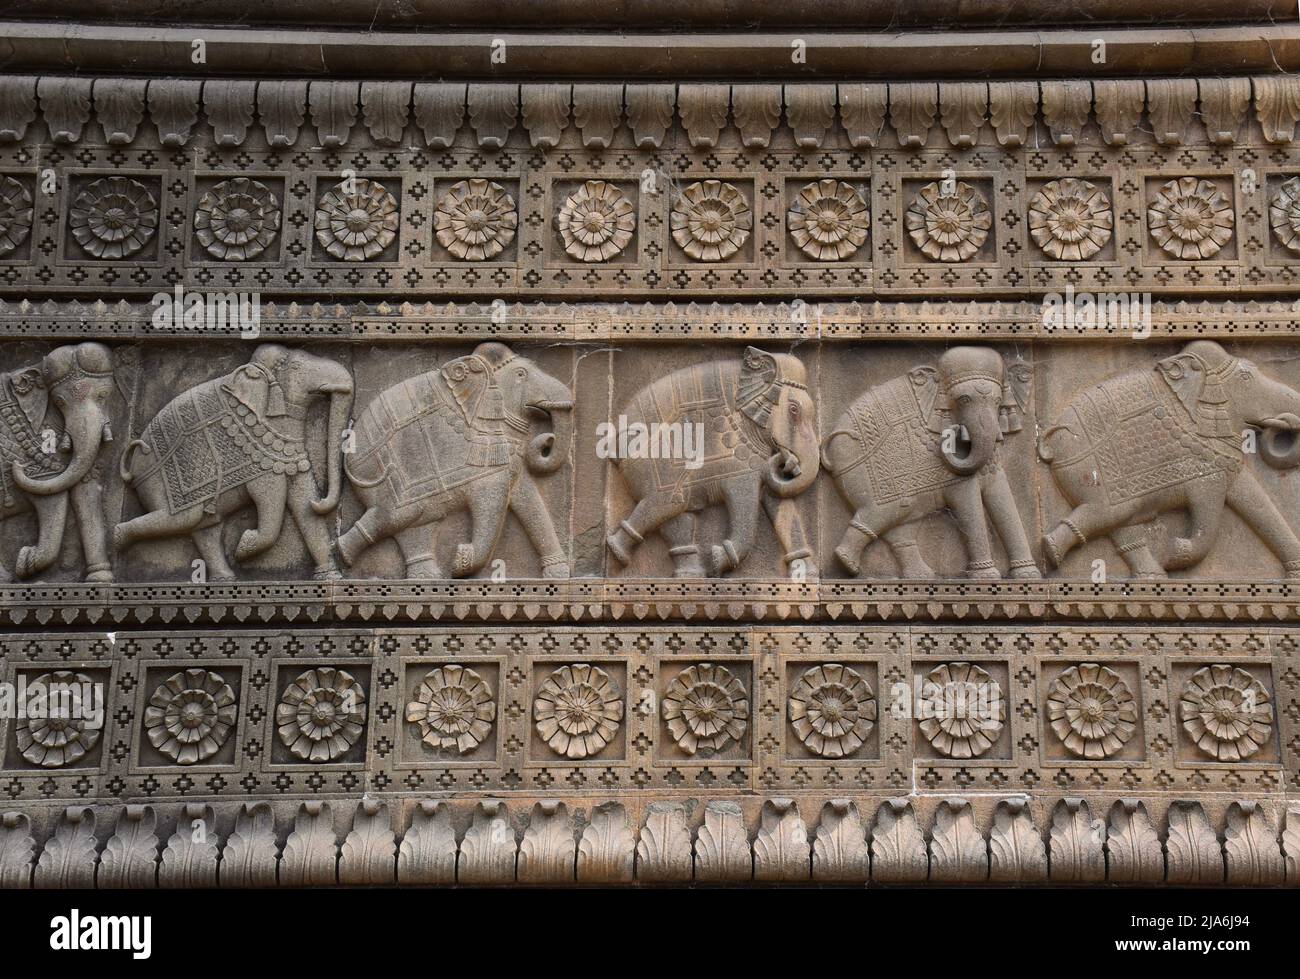 Design of small elephants on the wall of Ahilyabai Fort, Maheshwar (Madhya Pradesh) Stock Photo